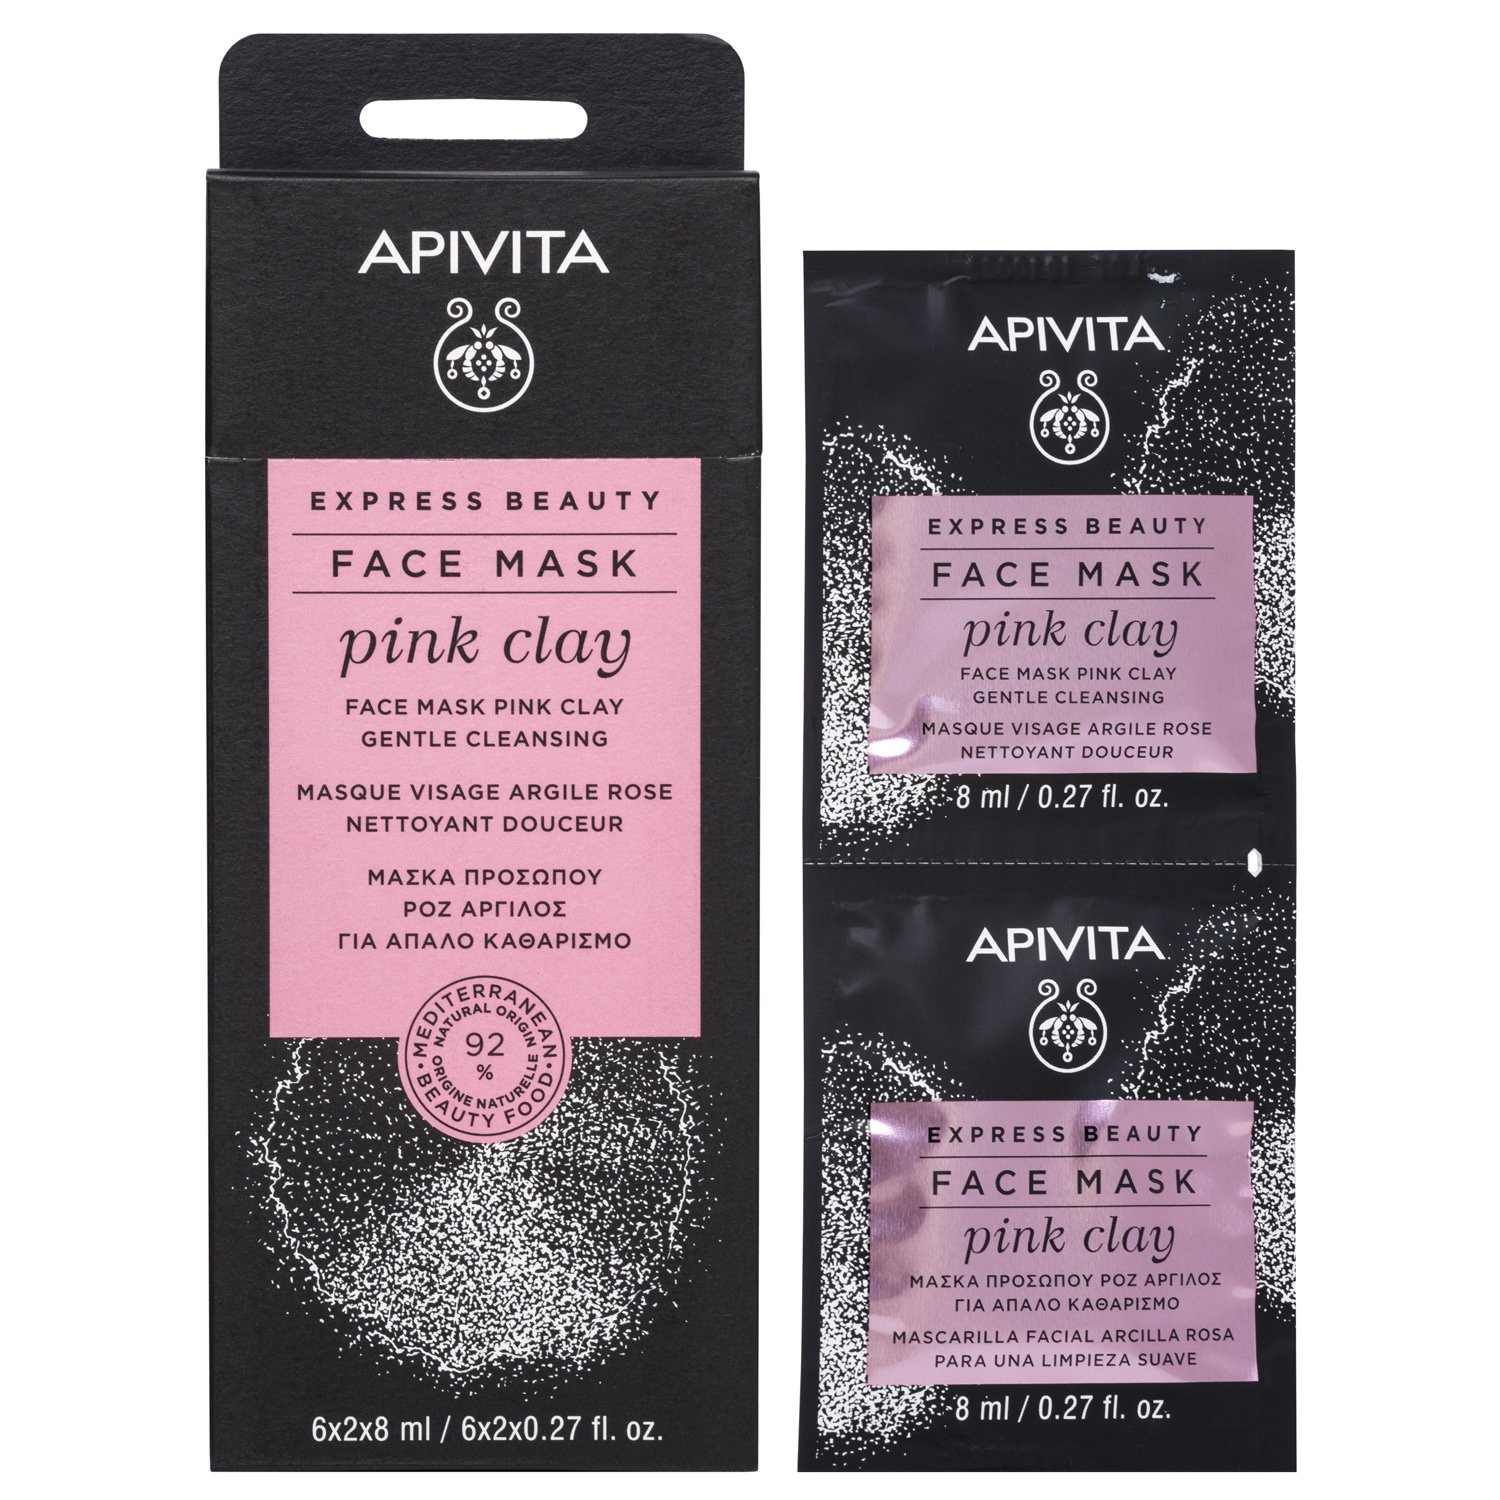 Apivita Express Beauty Μάσκα Για Απαλό Καθαρισμό με Ροζ Άργιλο 2x8ml